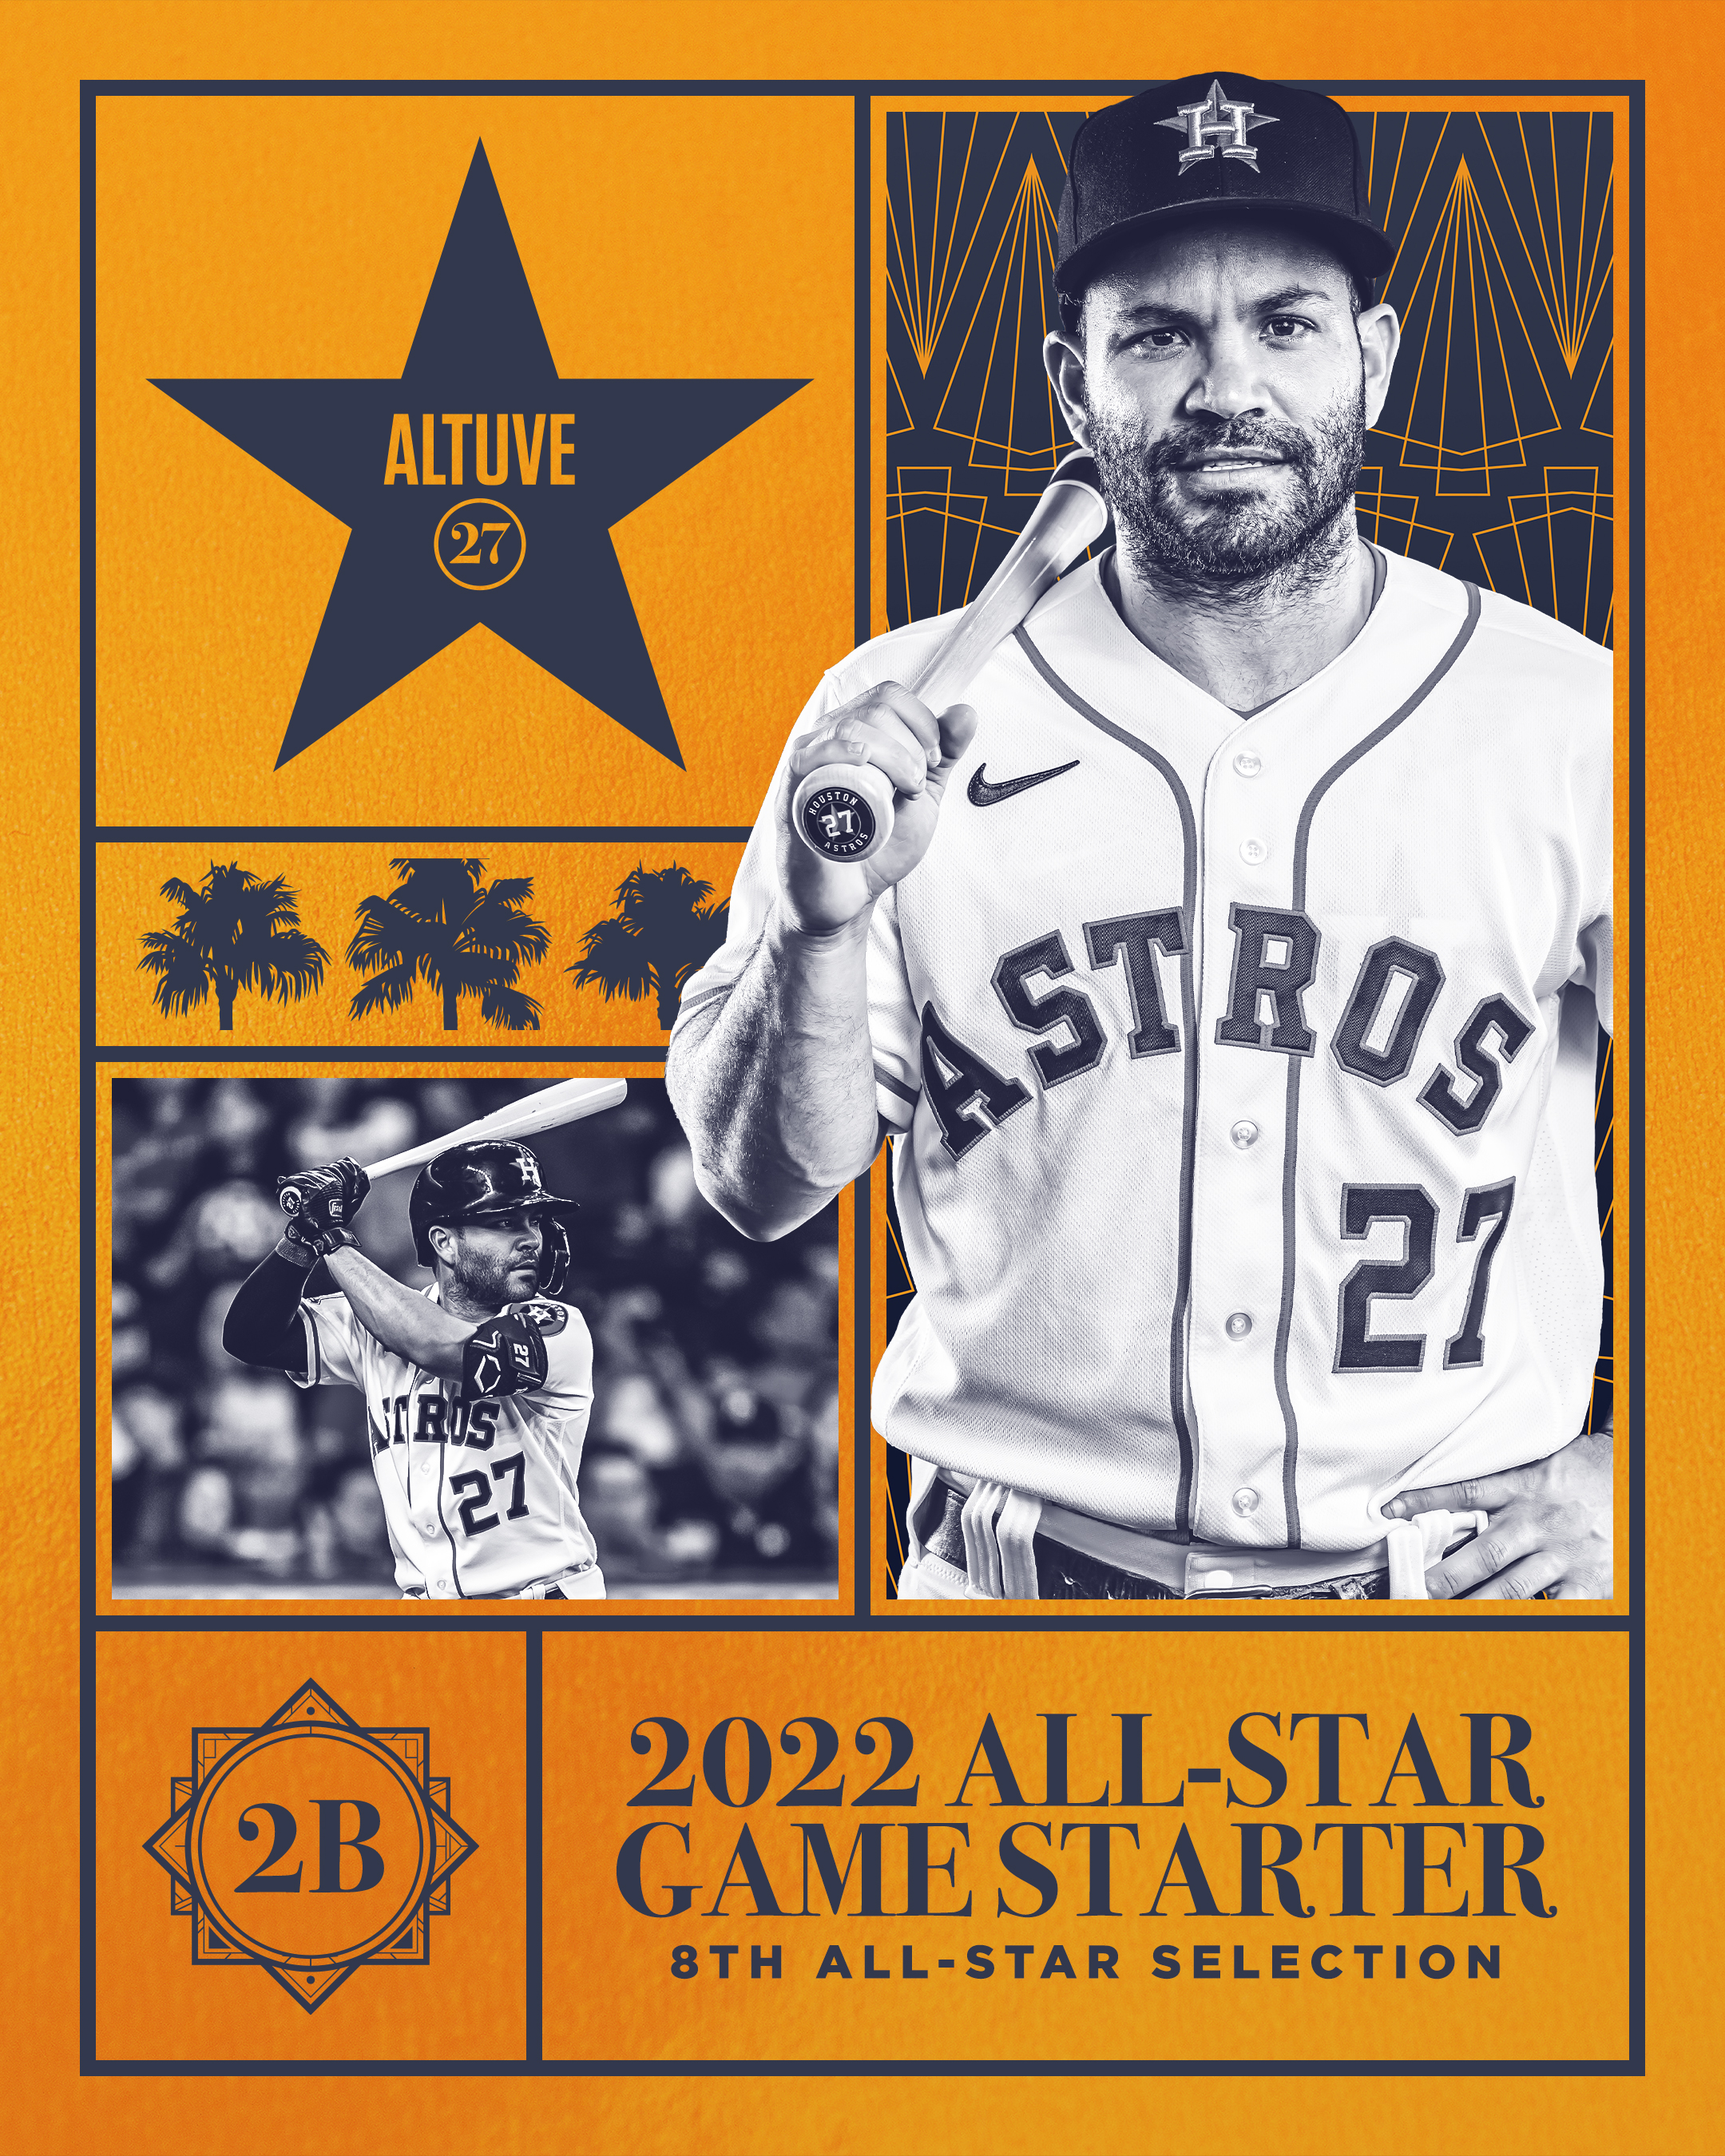 Houston Astros on X: Congratulations to Astros catcher Martín